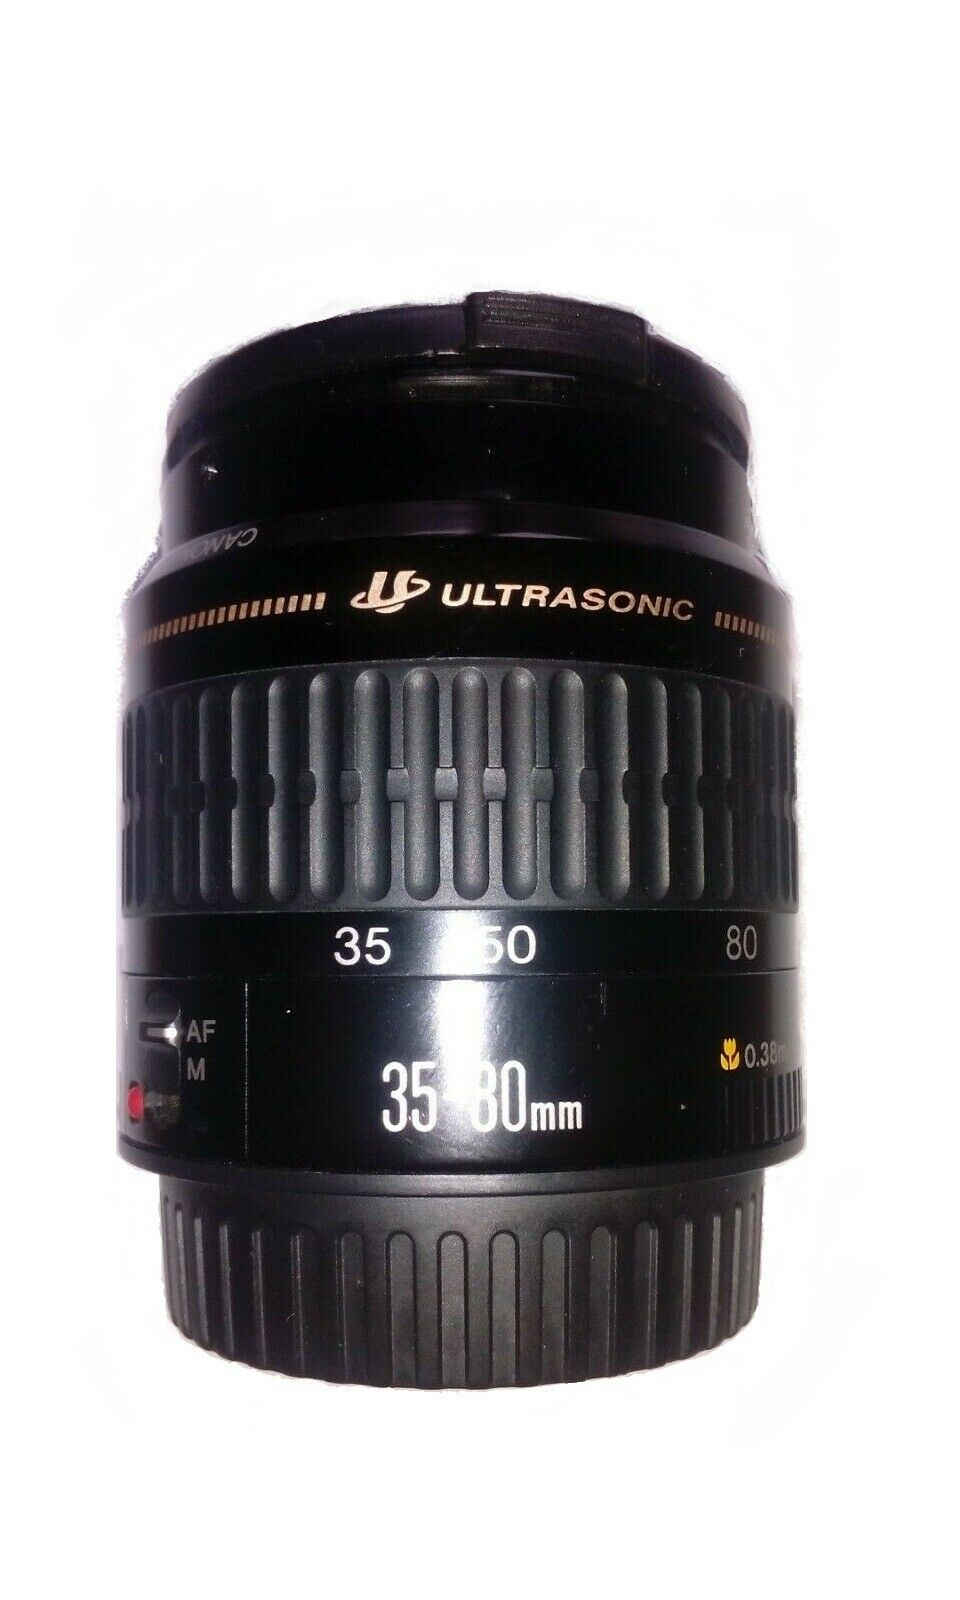 Canon EF 35-80mm F4-5.6 USM Lens Lenses and Cameras